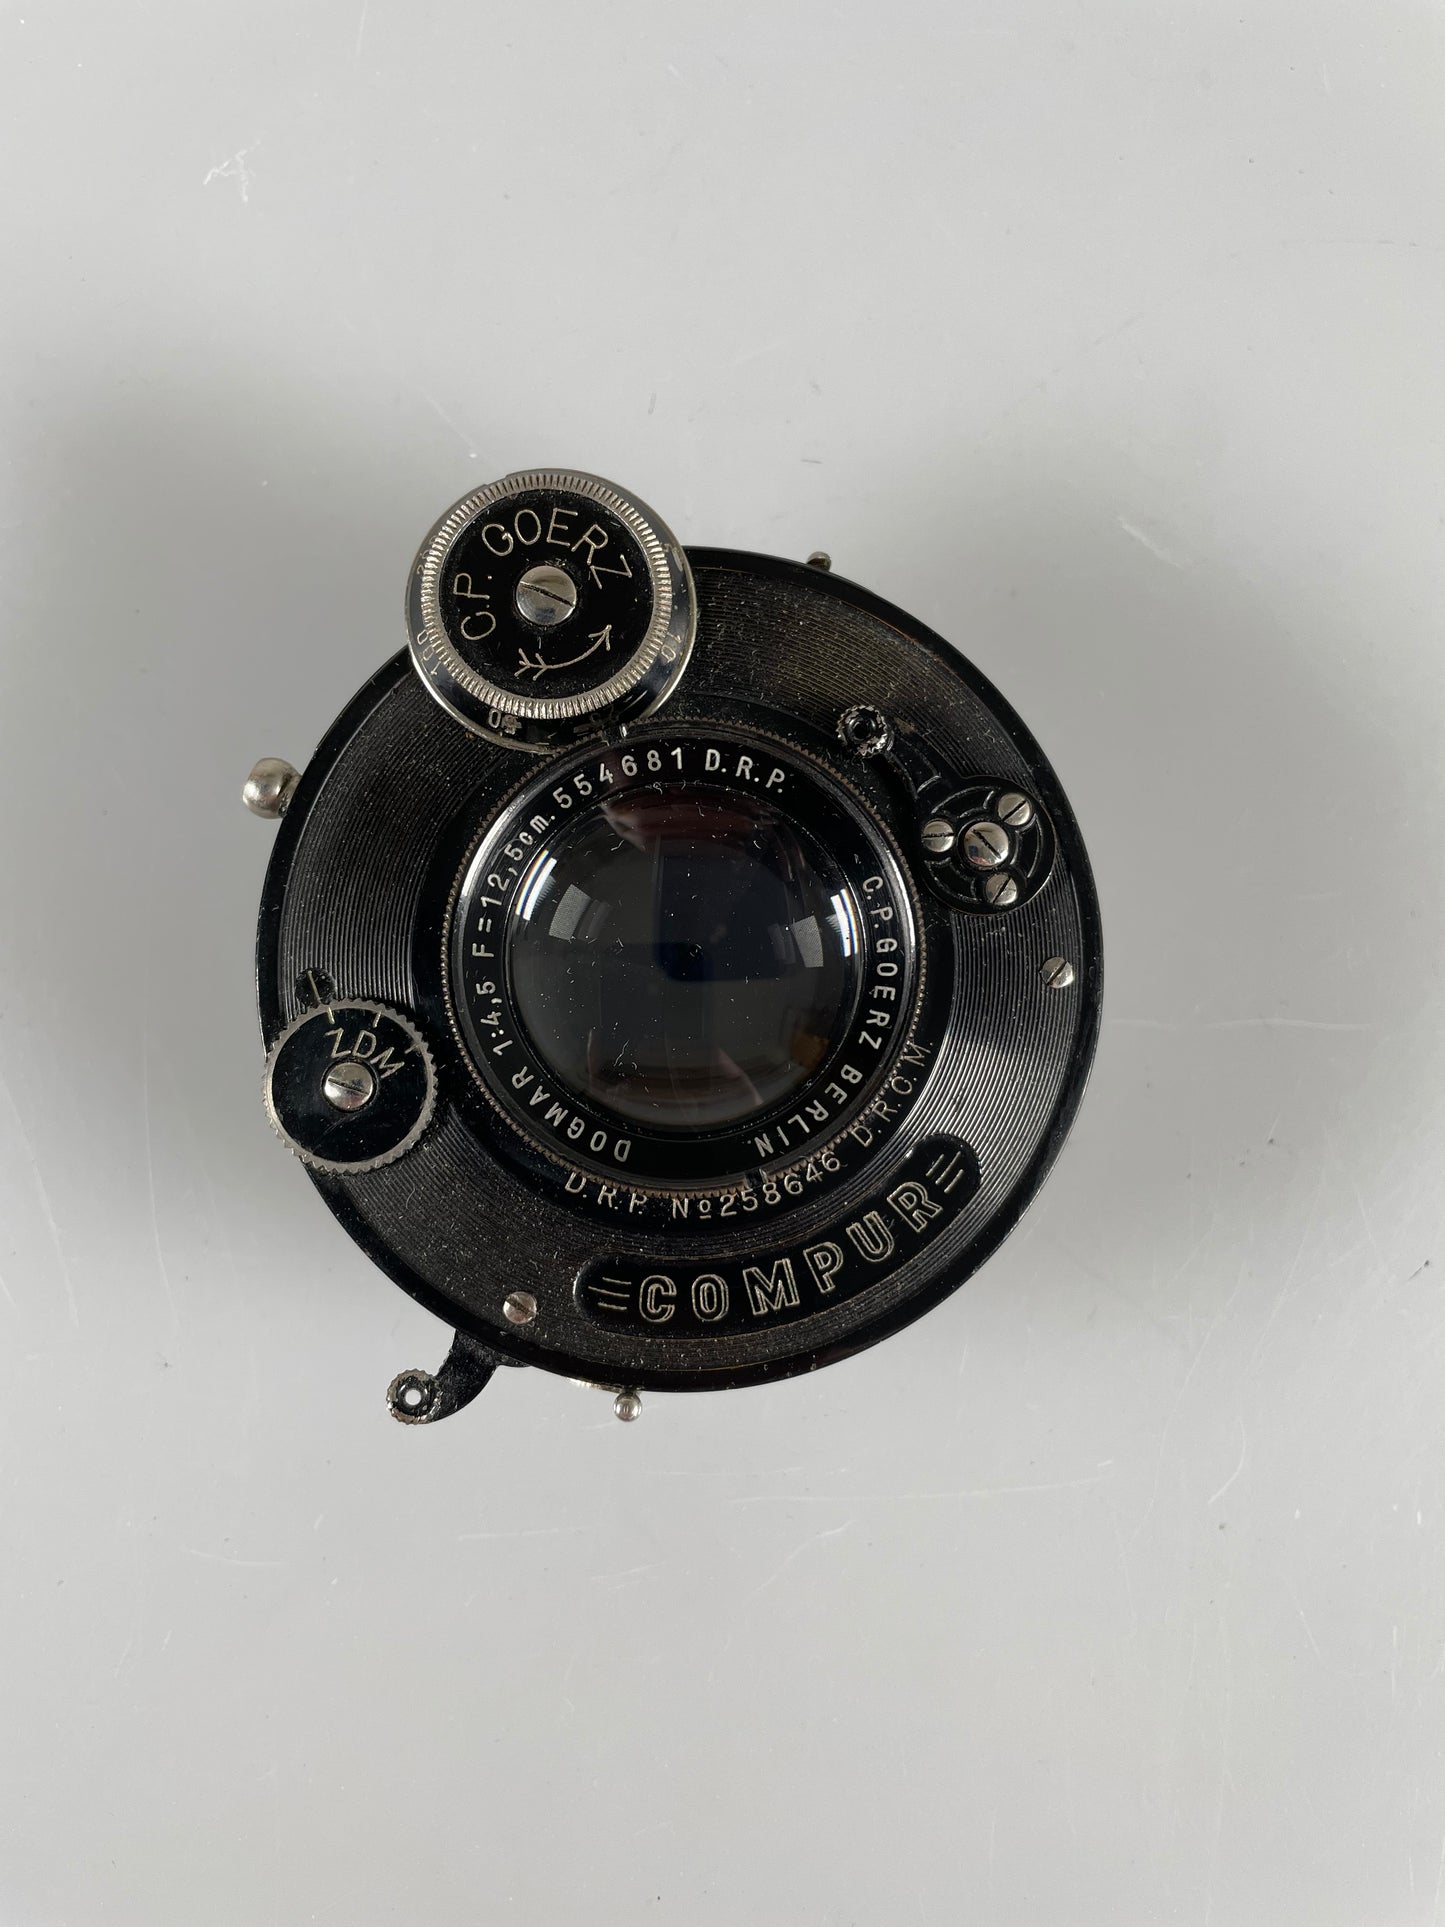 Goerz 12.5cm 125mm f4.5 Dogmar Lens with compur shutter